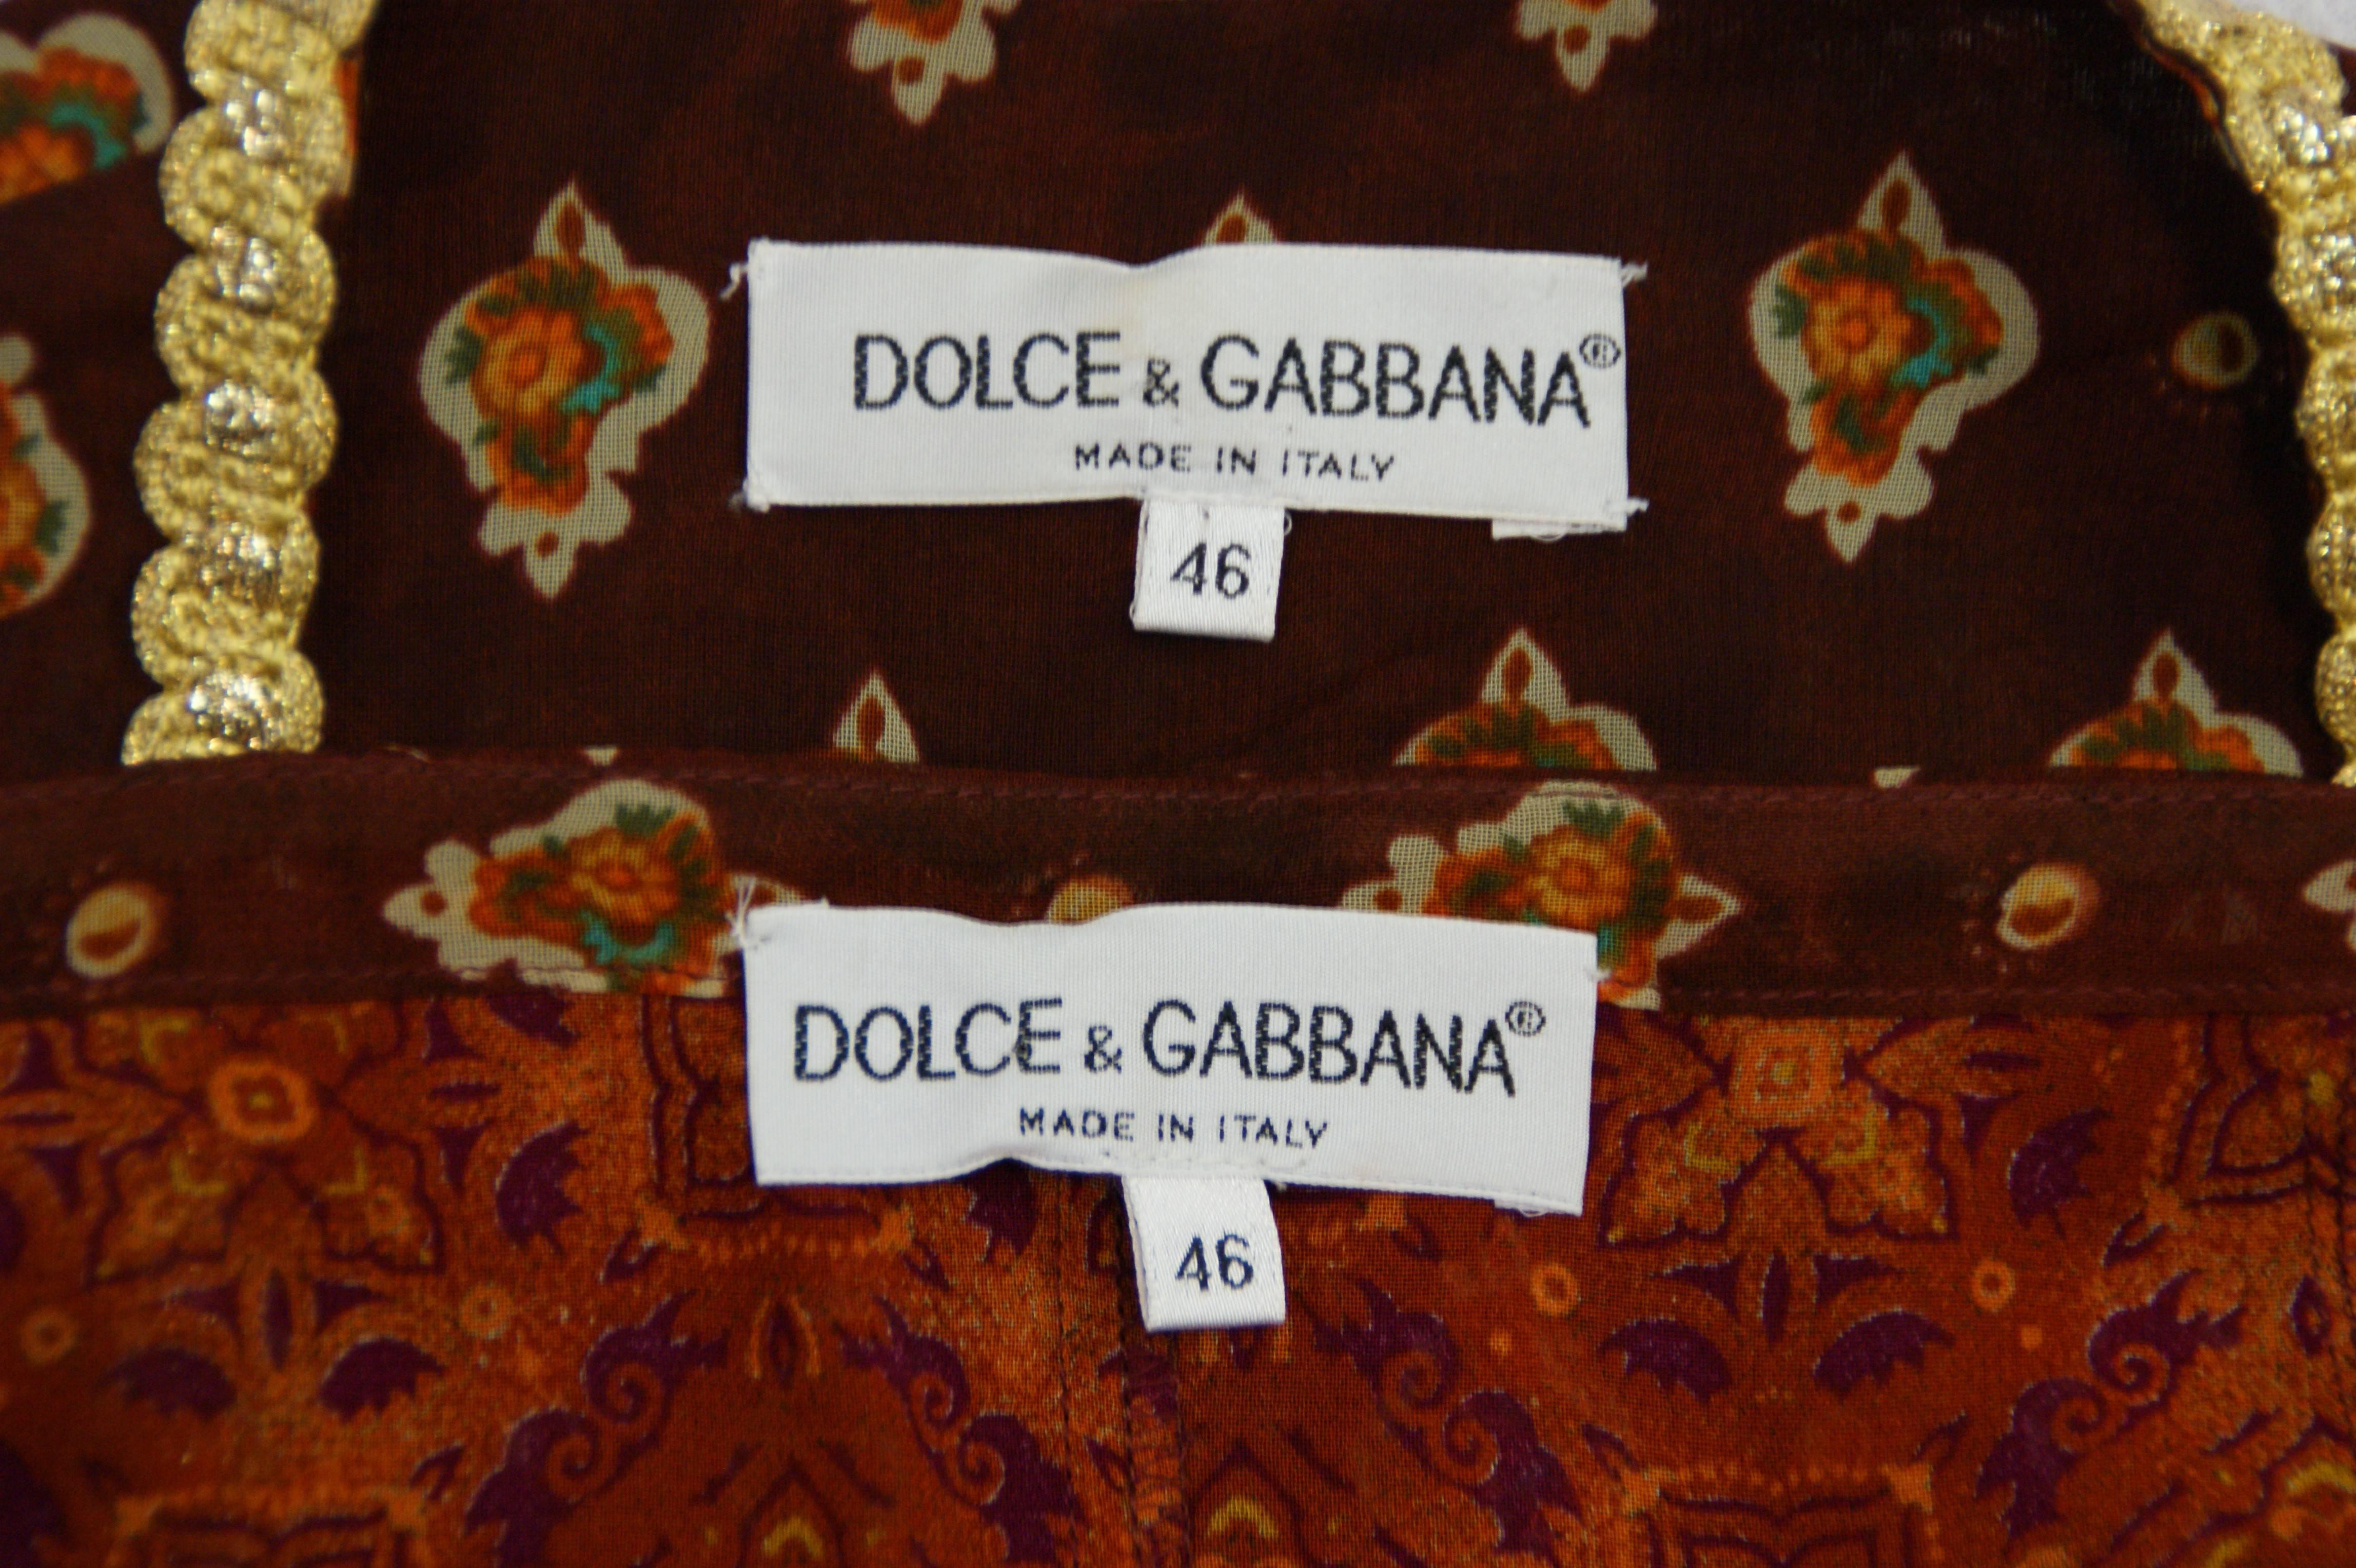 S/S 1994 Runway Dolce & Gabbana Gypsy Fringe Crop Top & Skirt Ensemble Suit  1